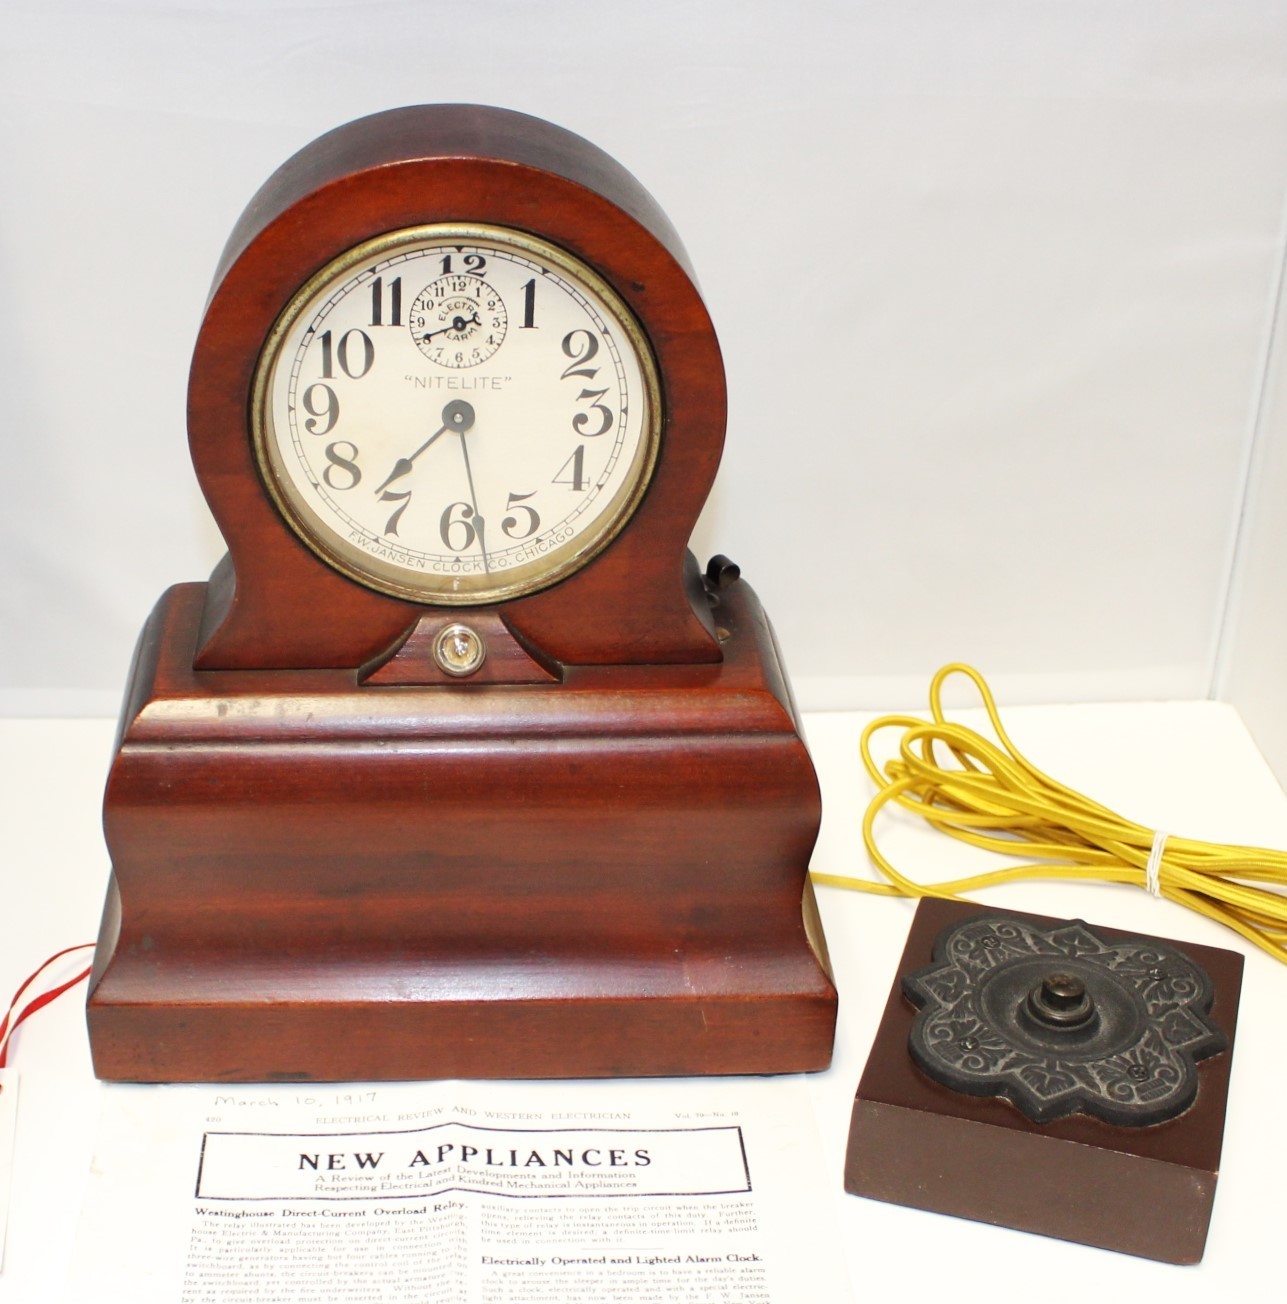 1910 American F.W. Jansen Nitelite Mahogany Wood Alarm Clock w/ Light